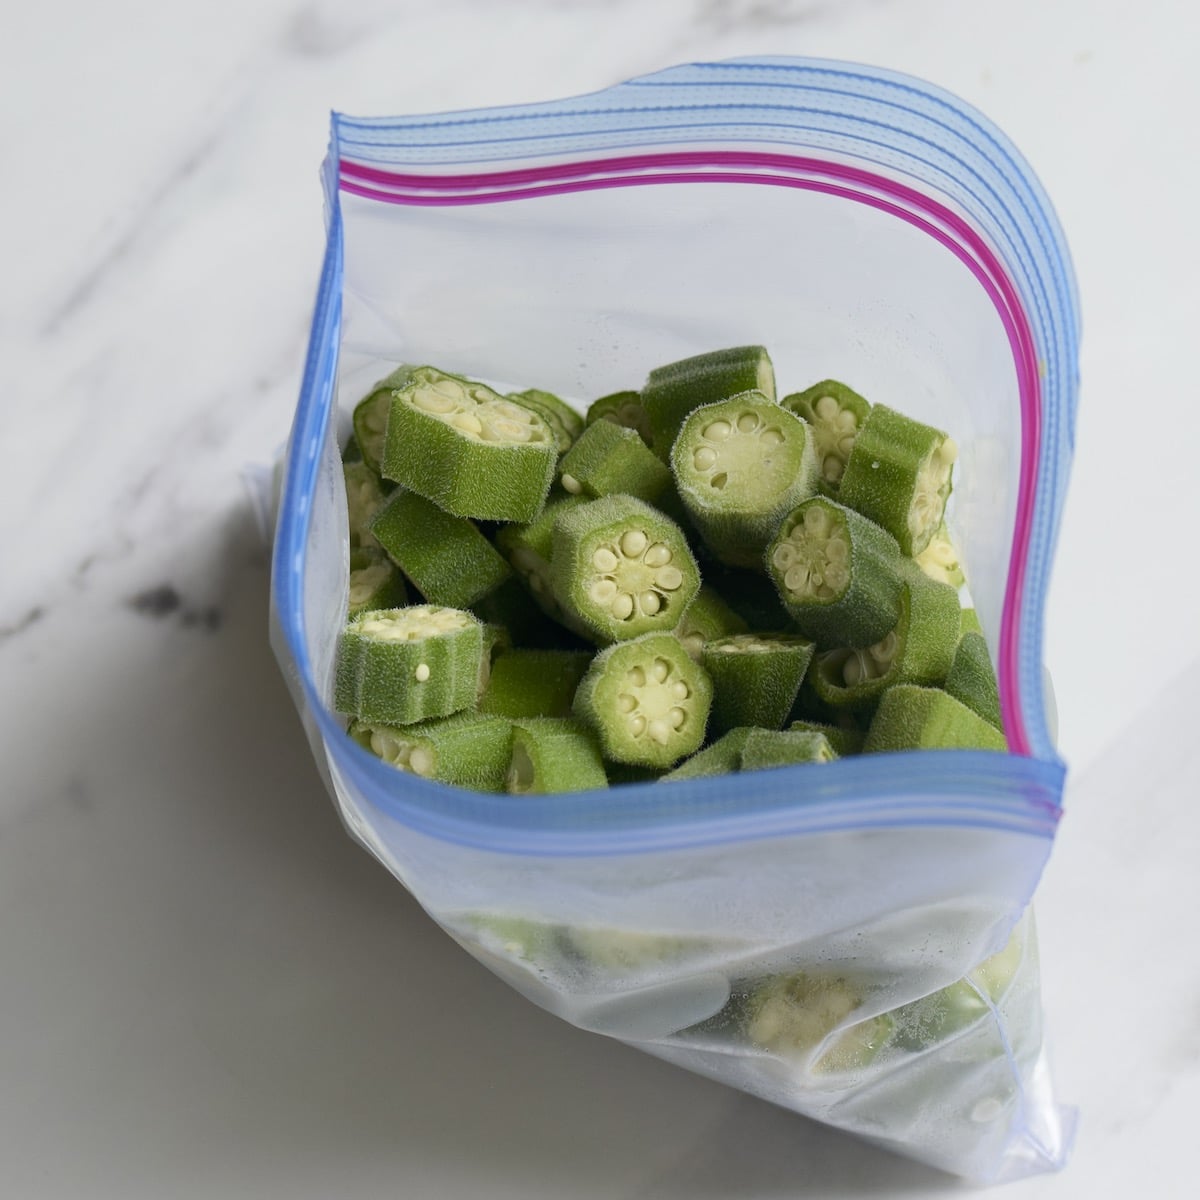 A Ziploc freezer bag filled with sliced okra.